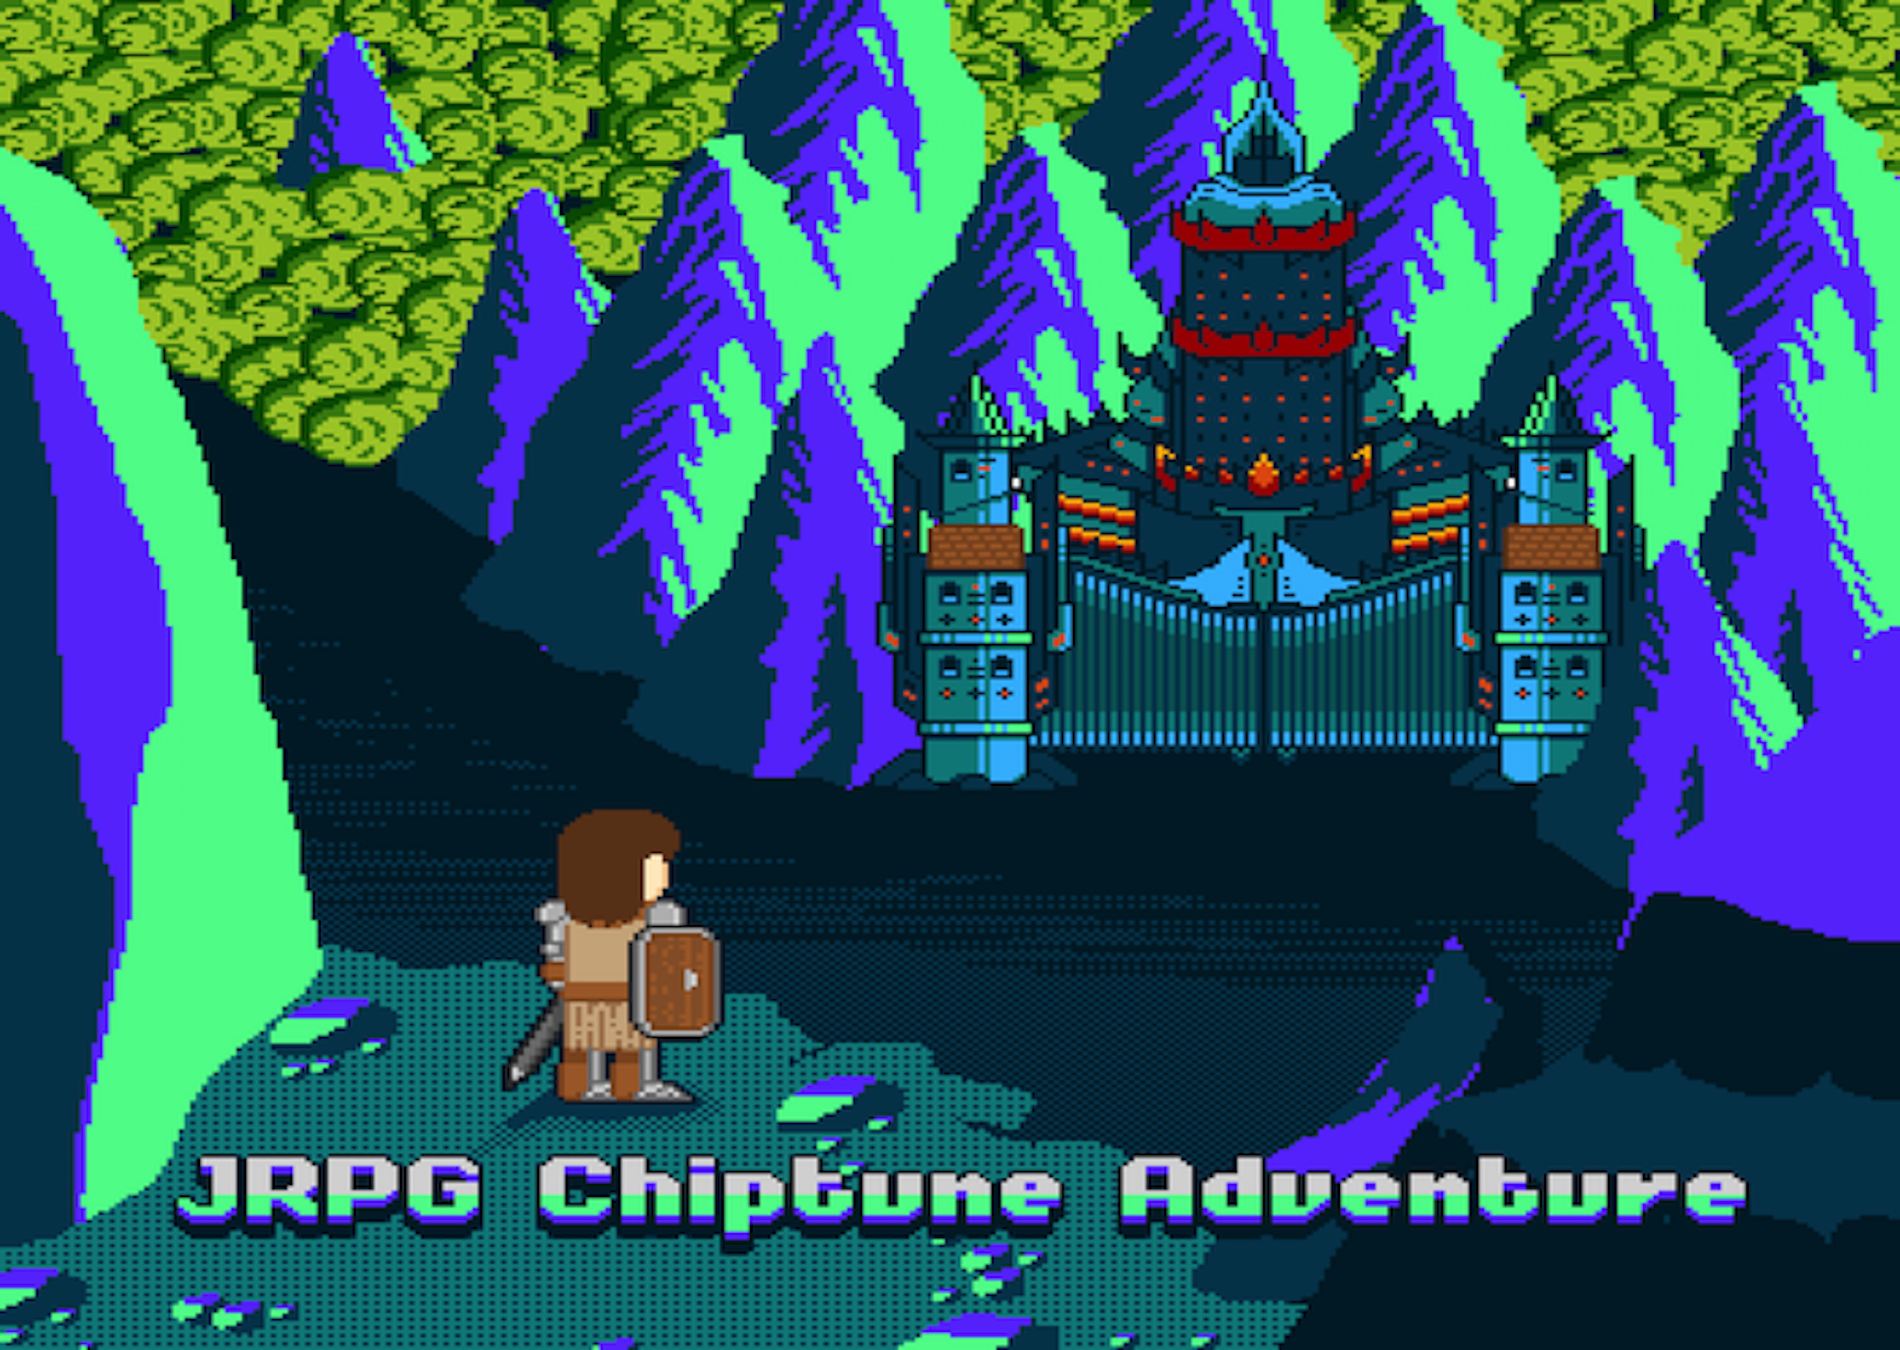 JRPG 8-Bit/Chiptune Adventure Music Pack